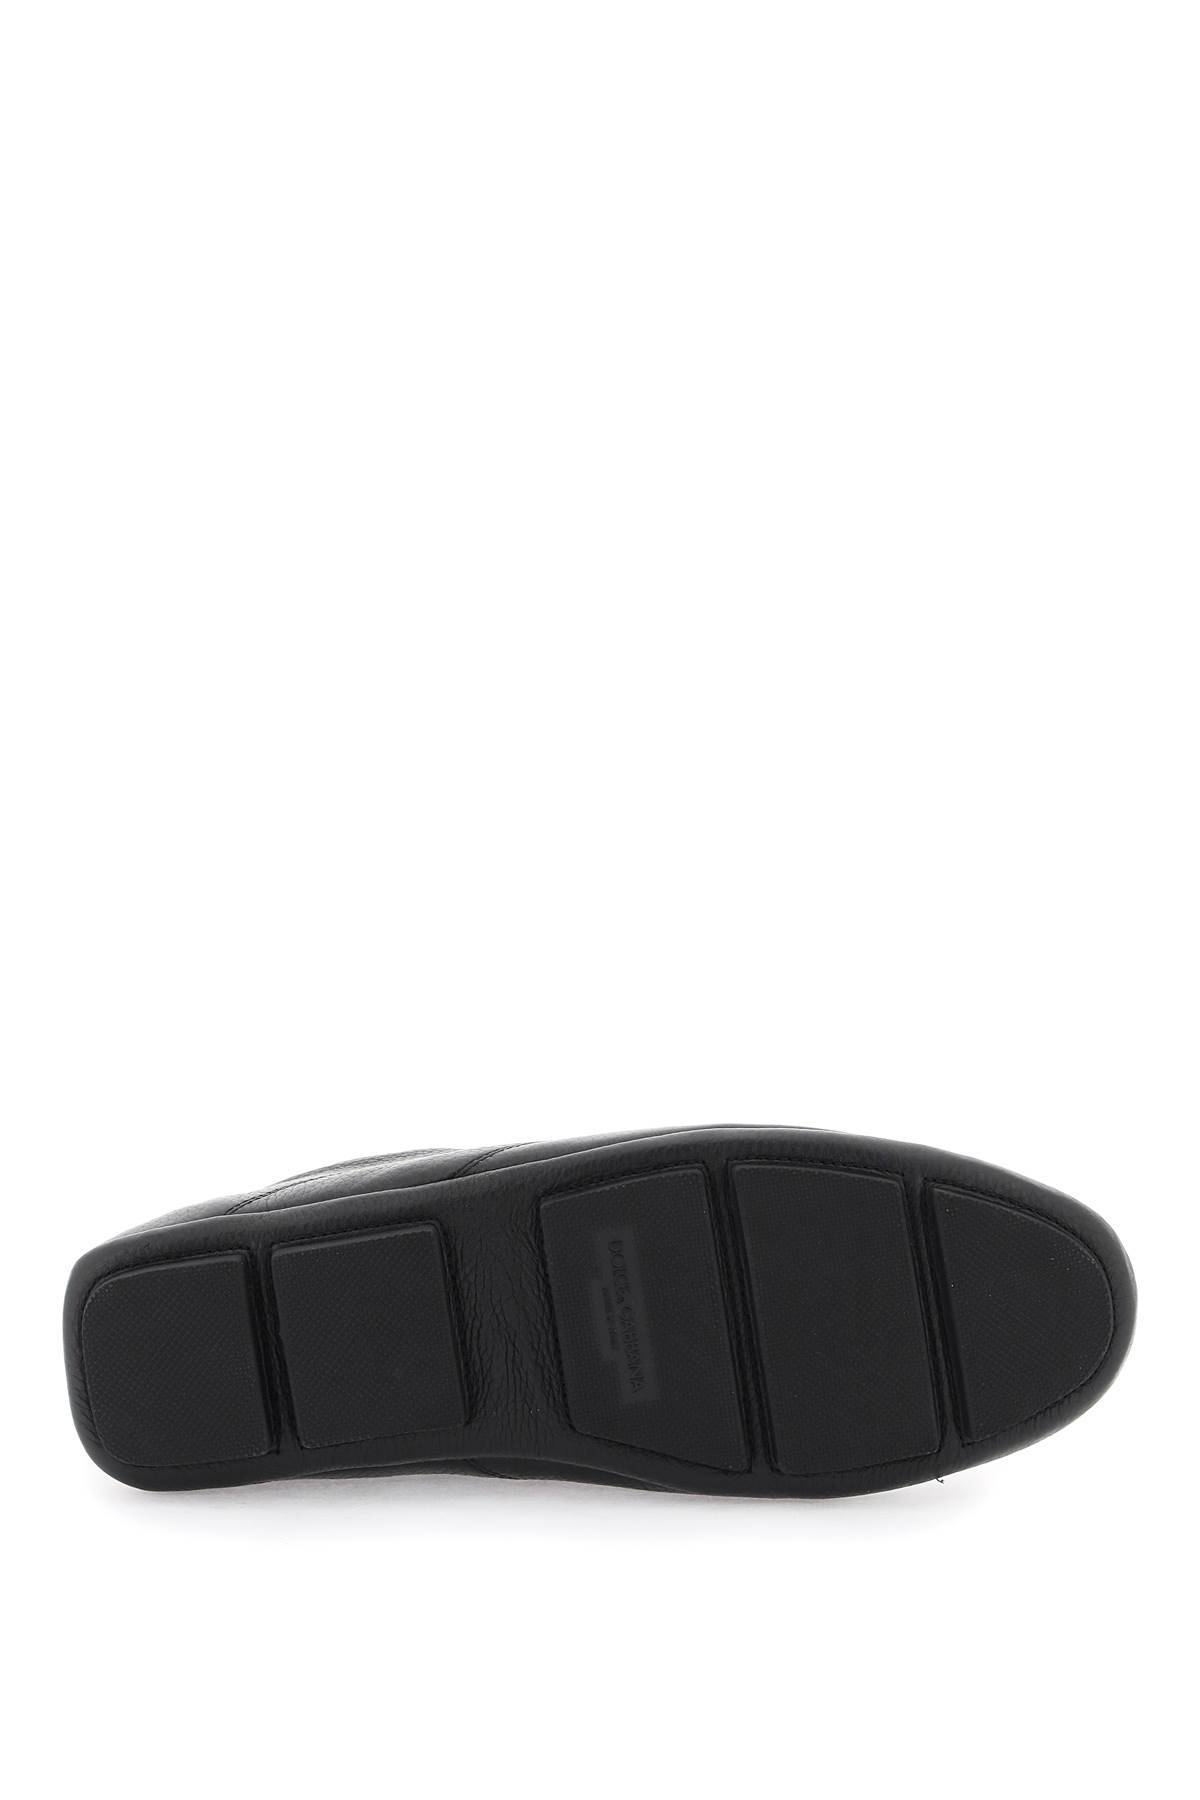 Shop Dolce & Gabbana Leather Slipper For In Black